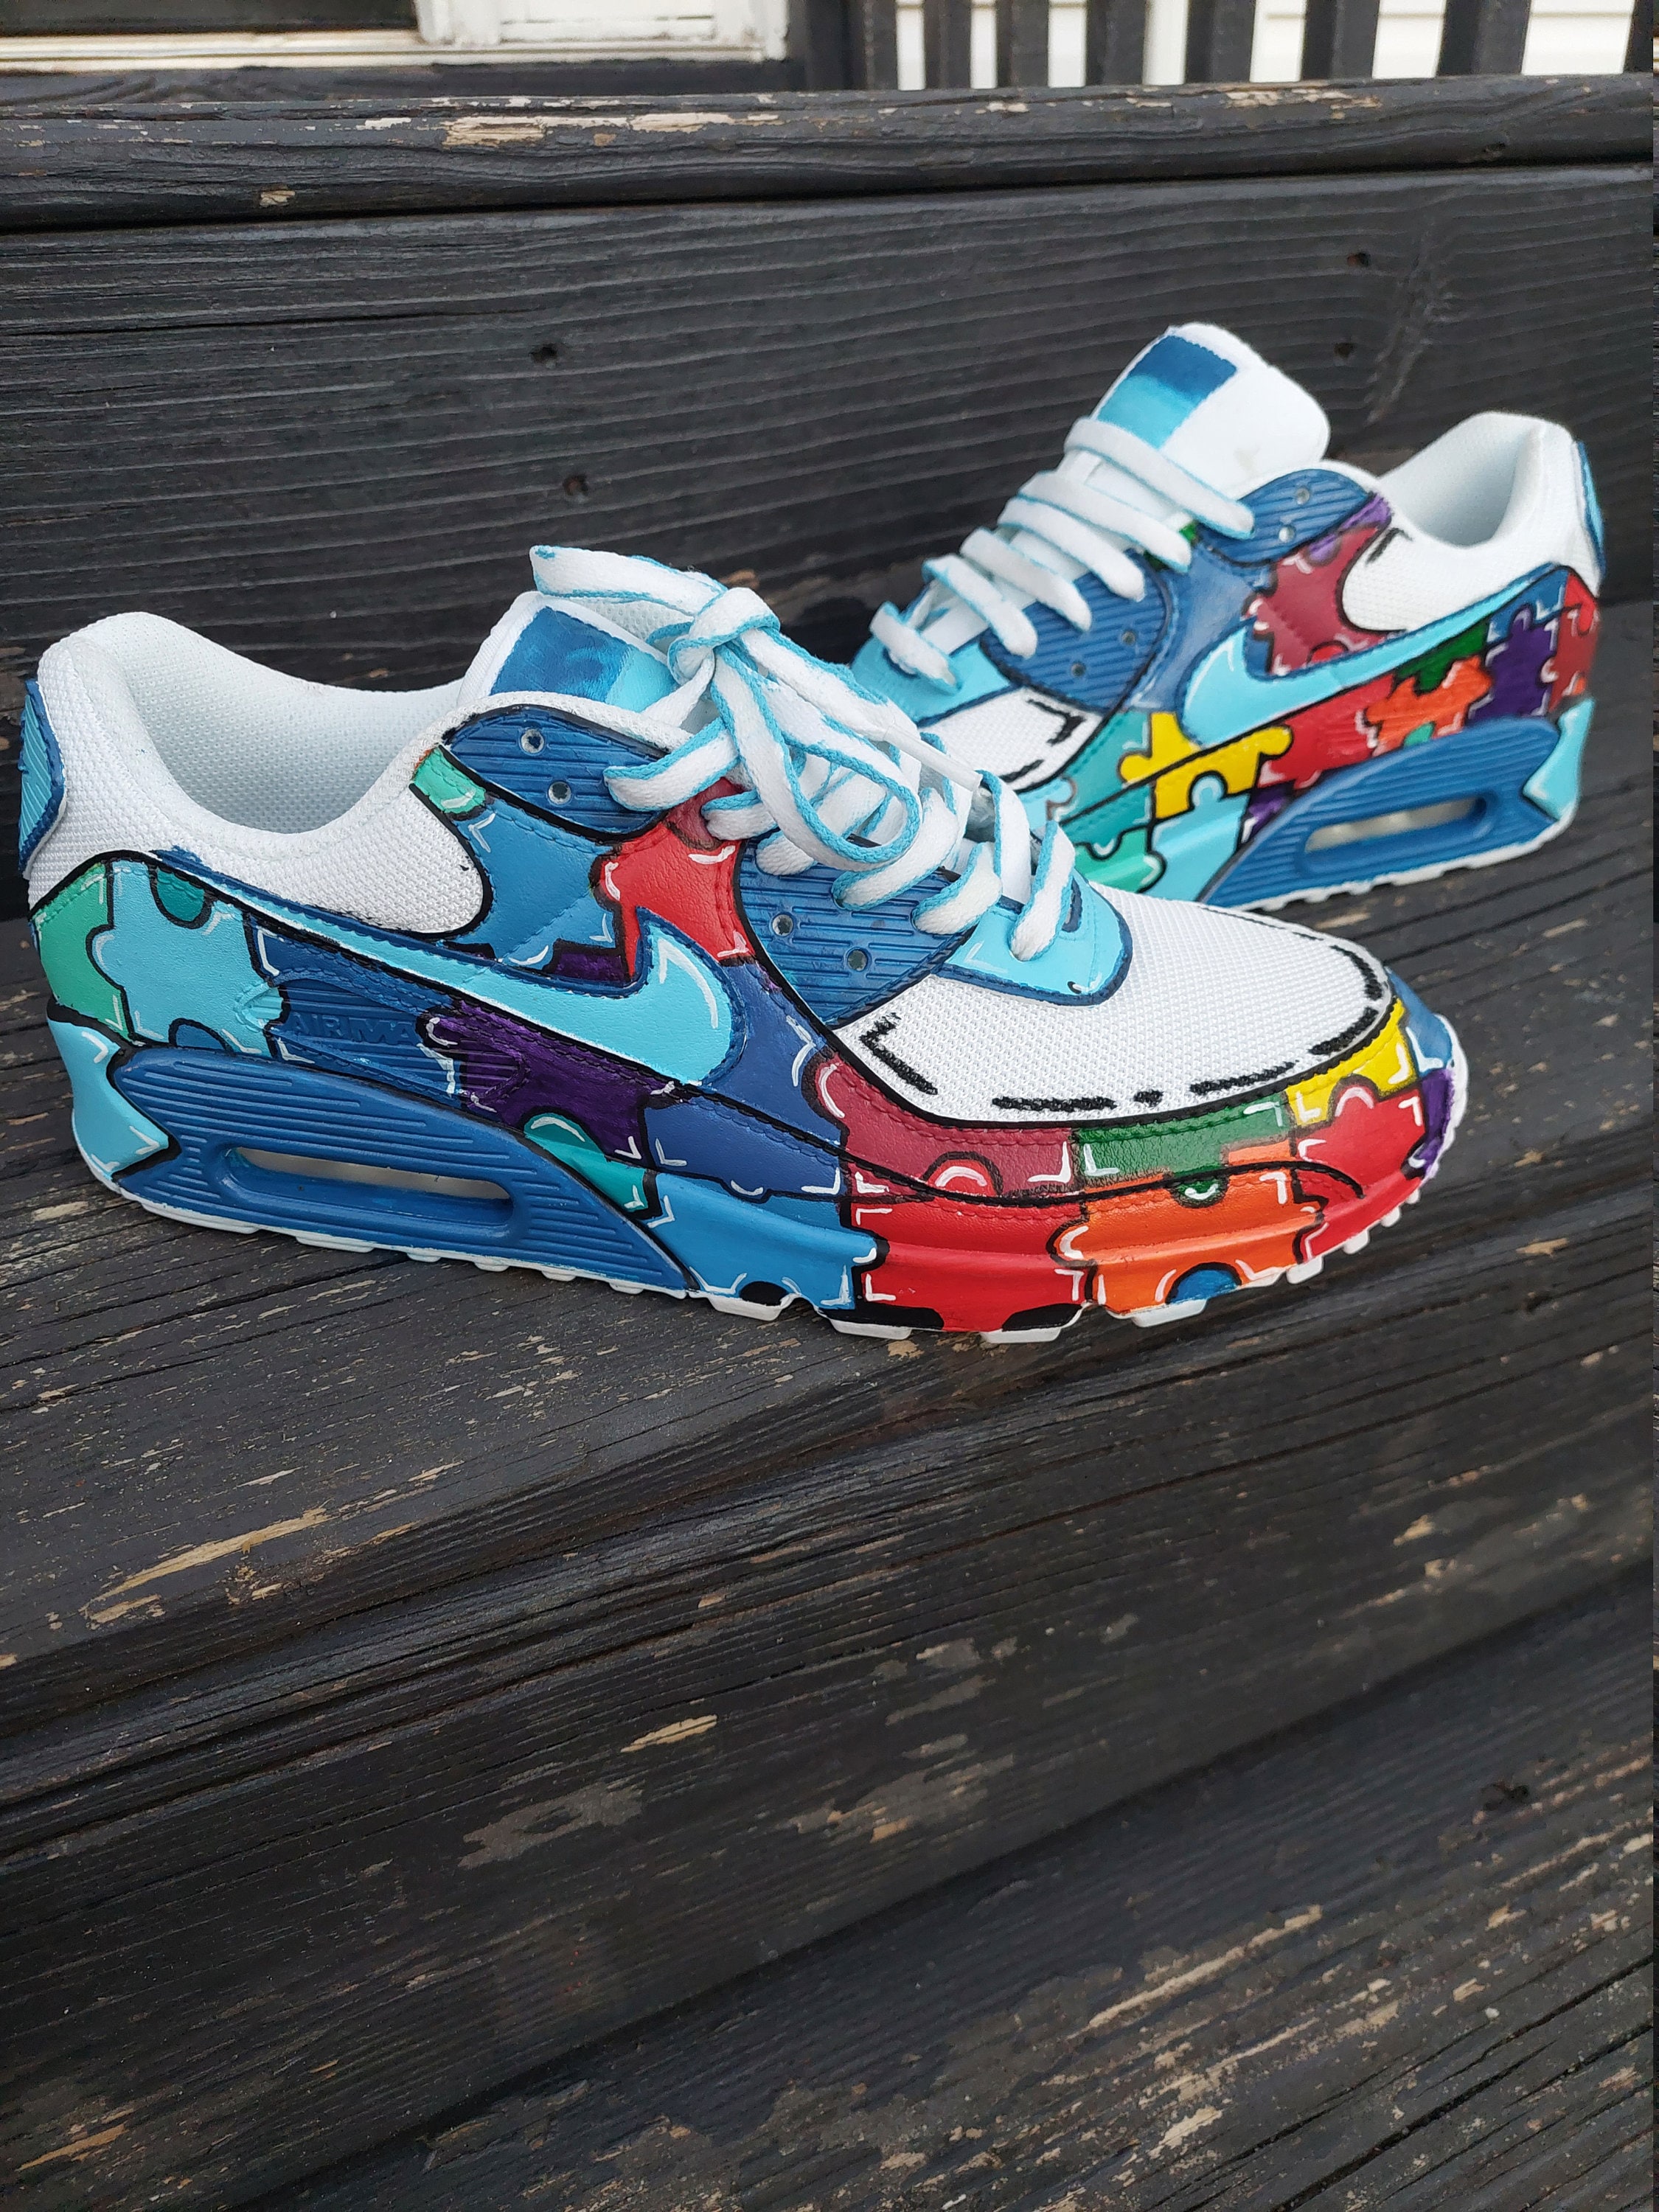 SPONGEBOB Patrick Nike Air Max 90 LTR Custom Shoes Hand Painted Sneakers 